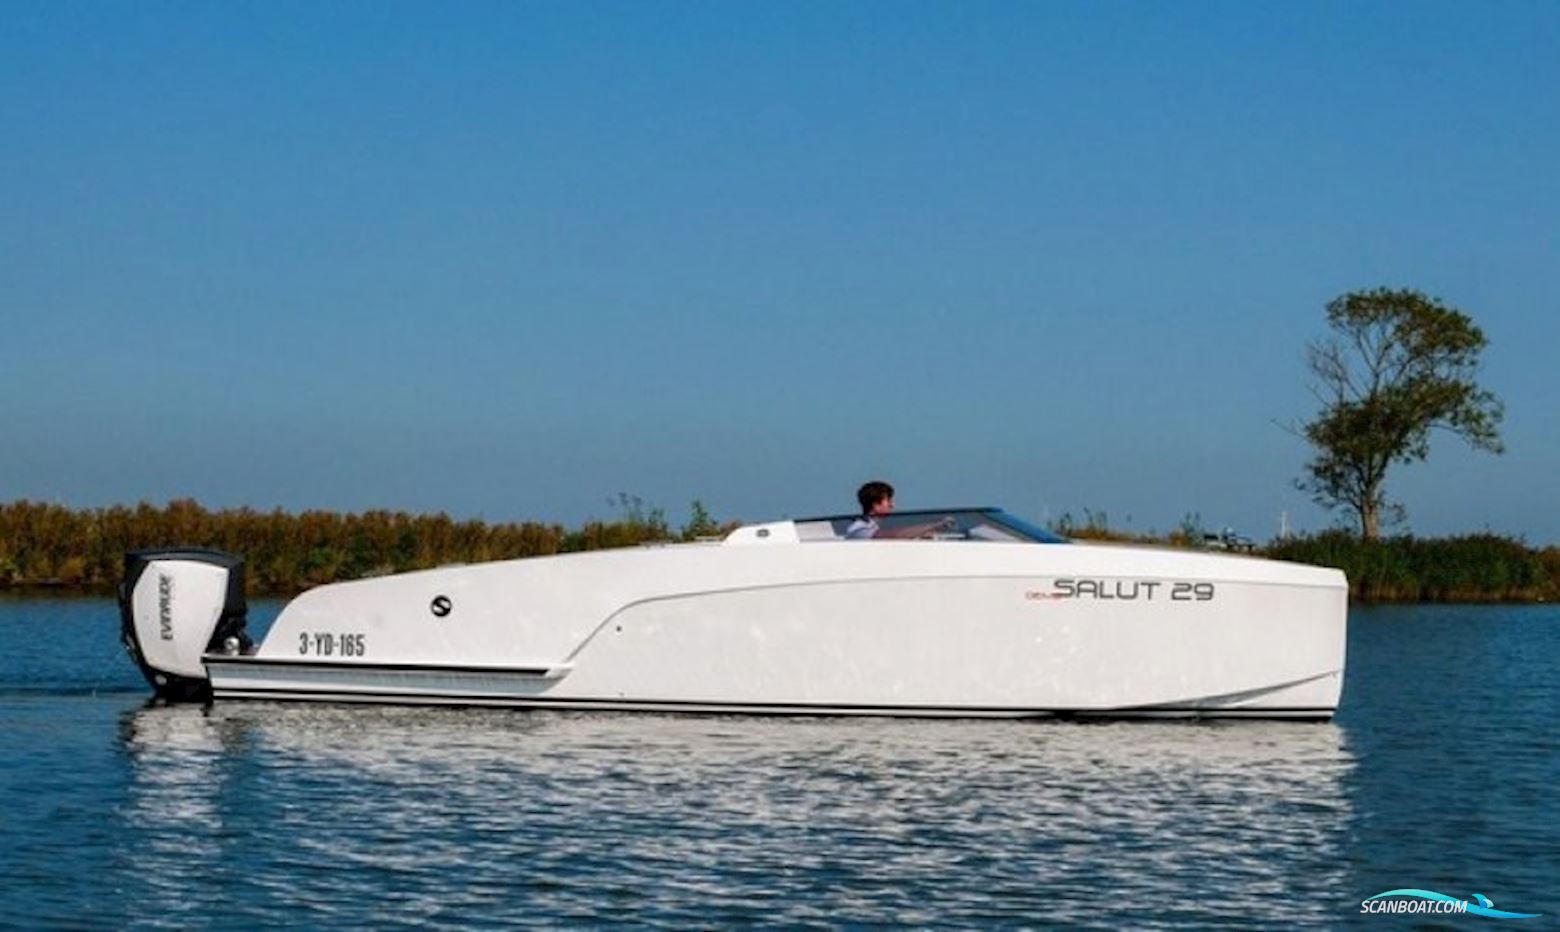 Salut 29 Motorboot 2020, mit Evinrude motor, Niederlande